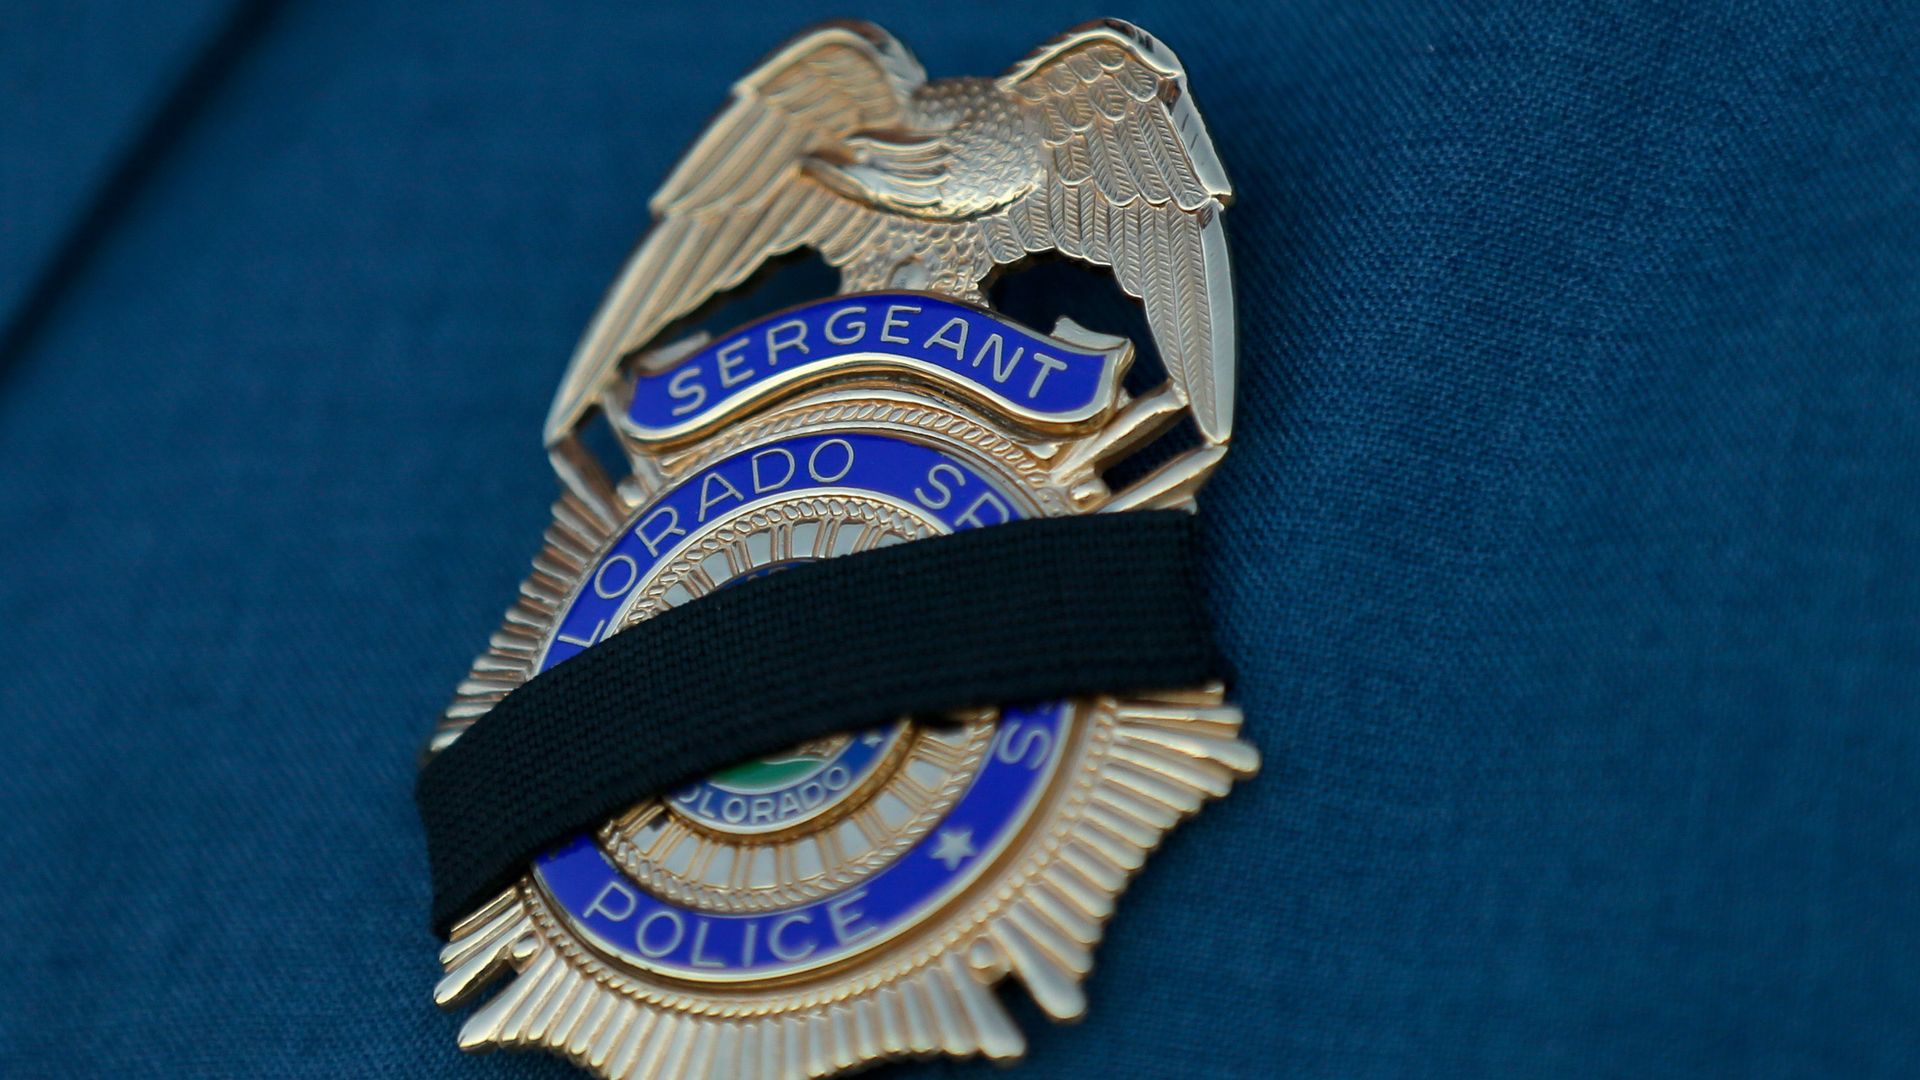 A Colorado Springs police badge